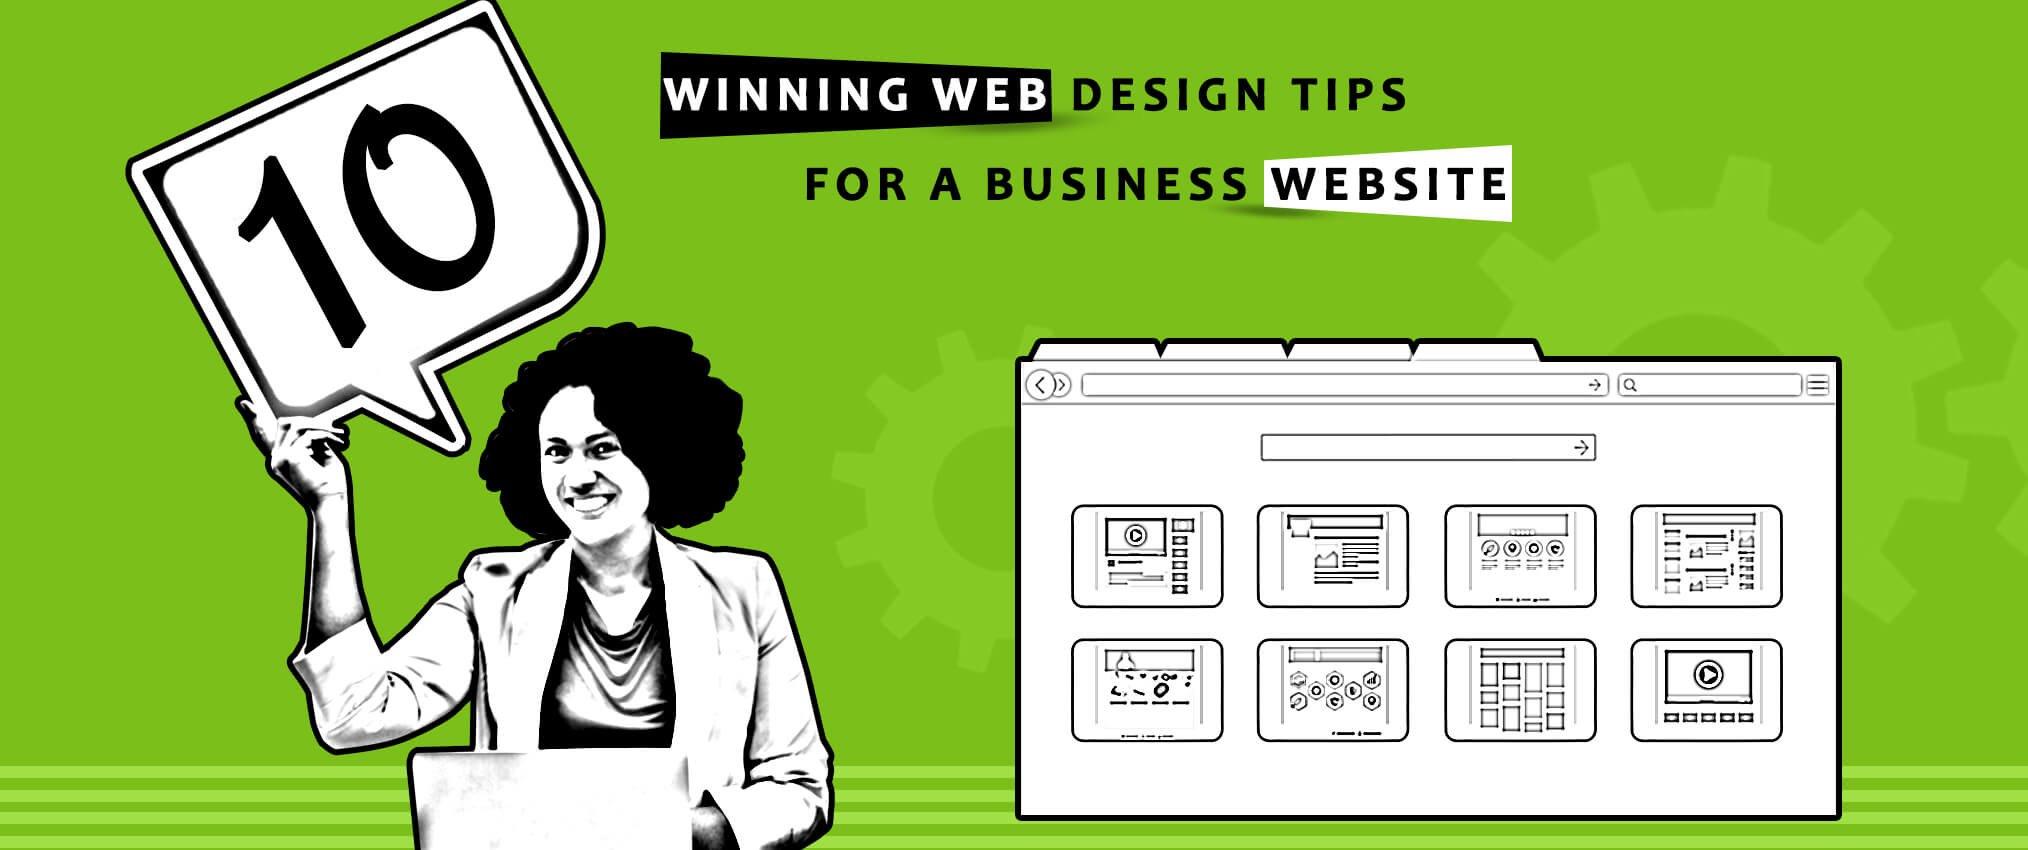 10 Winning Web Design Tips for a Business Website